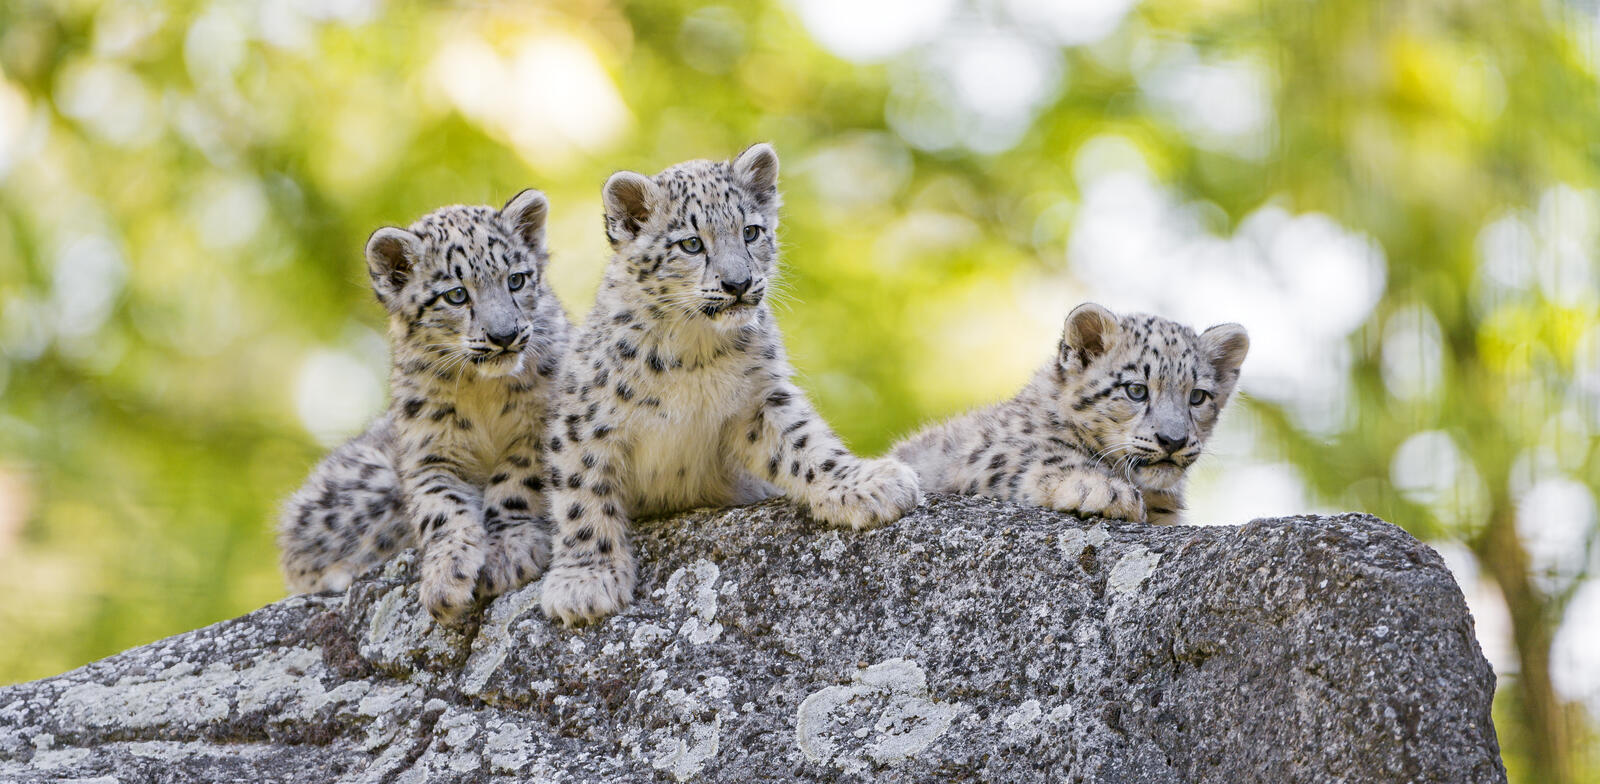 Wallpapers Snow leopard predator kittens on the desktop